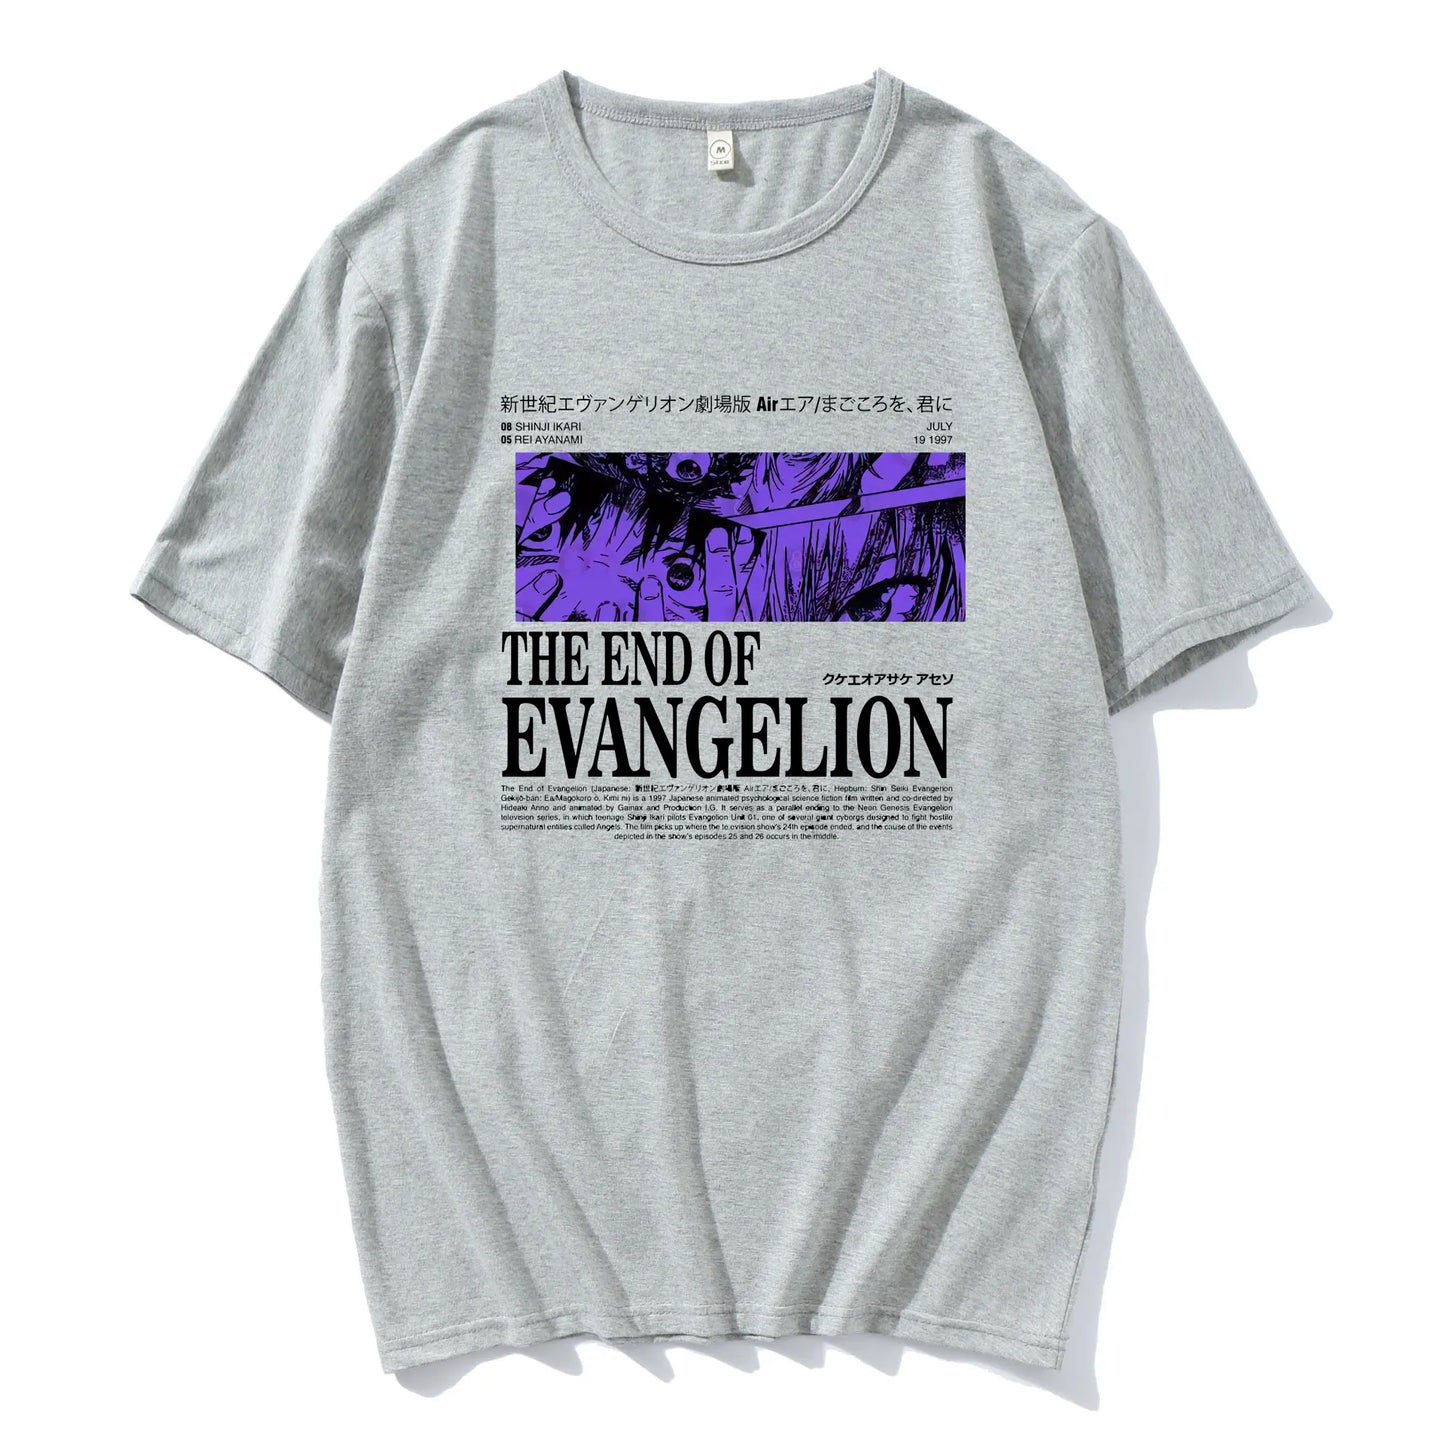 The End of Evangelion Tshirt Gary